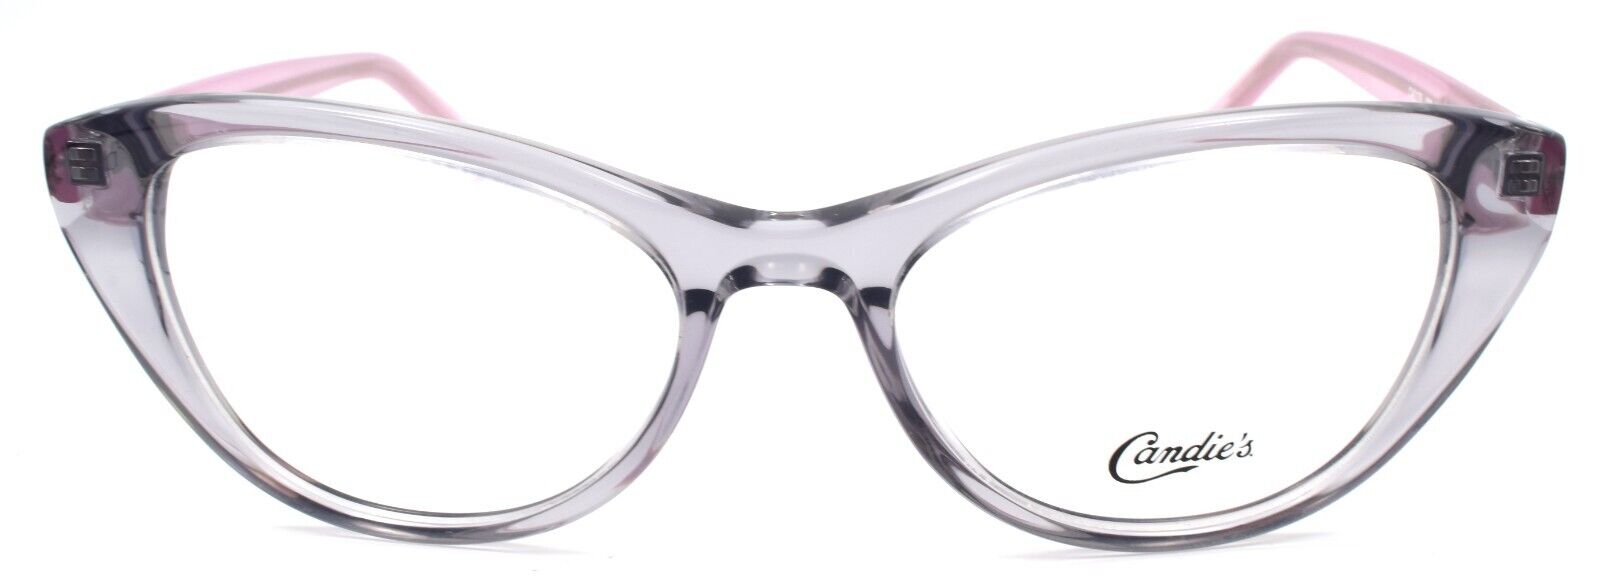 2-Candies CA0178 020 Women's Eyeglasses Frames Cat Eye 50-17-140 Grey Crystal-889214071613-IKSpecs